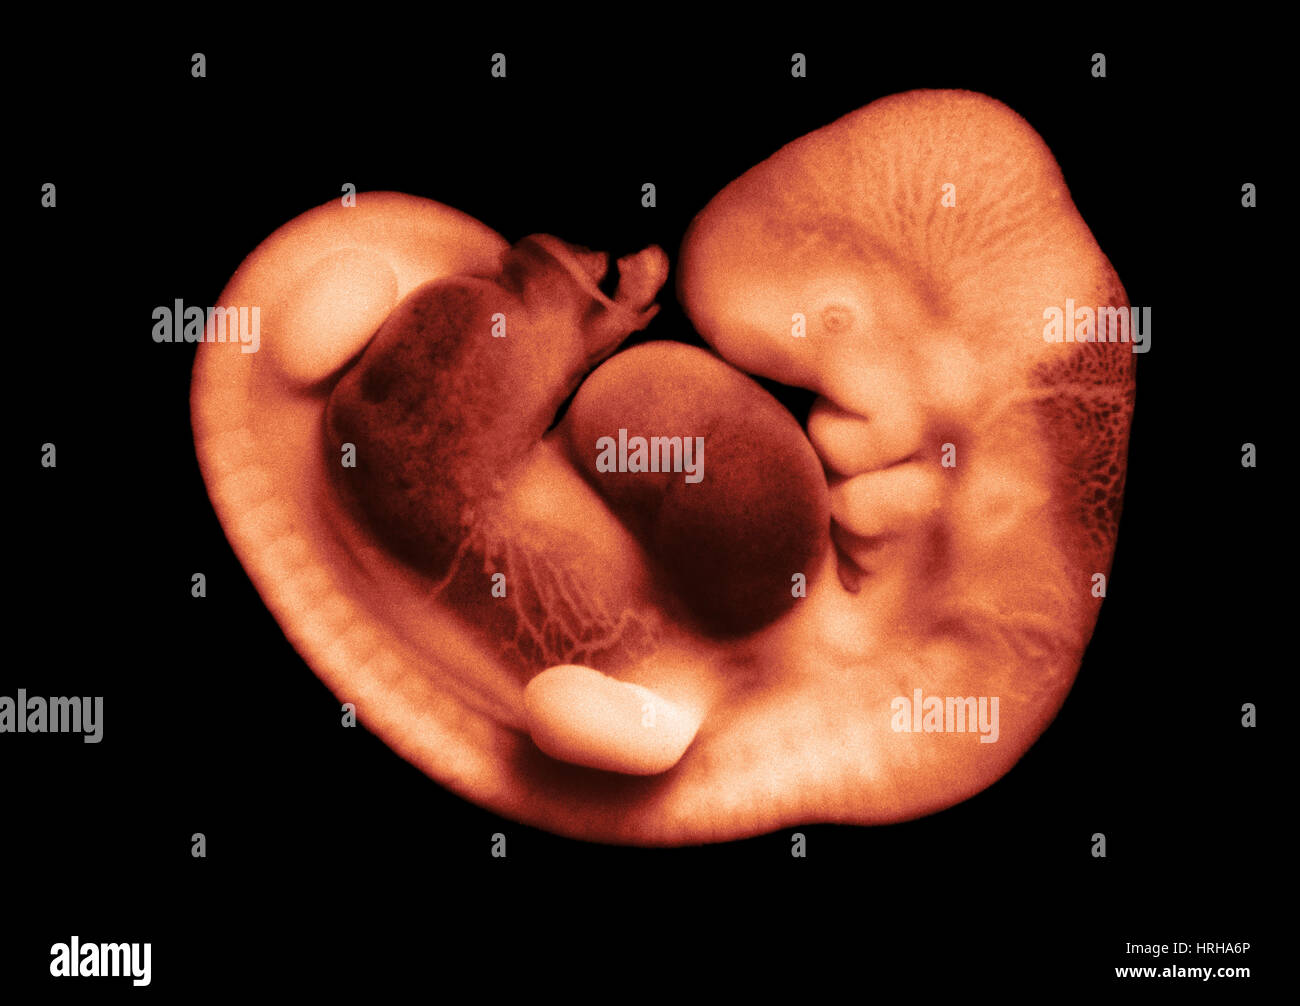 35 day old human embryo Stock Photo